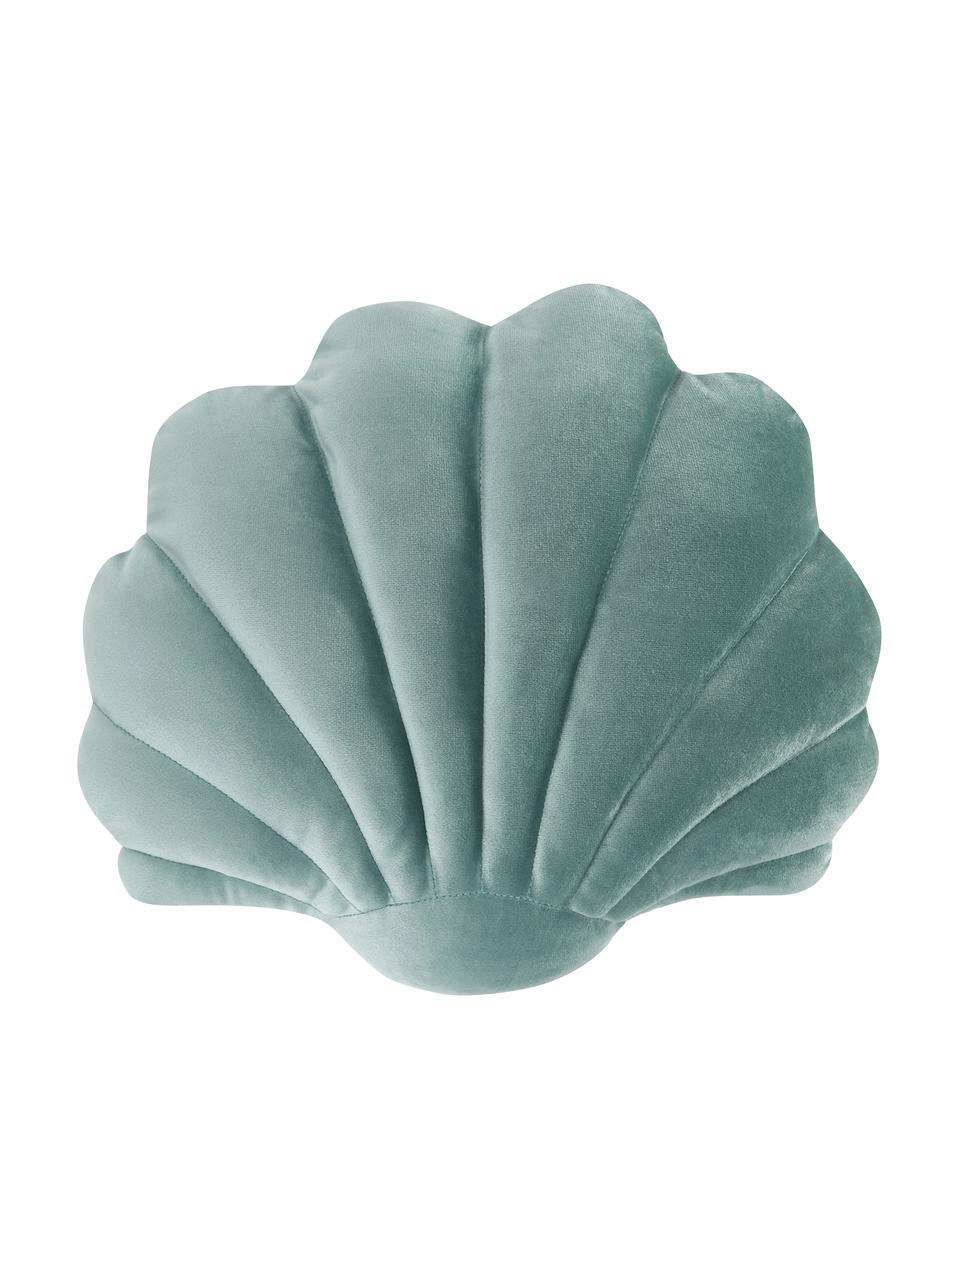 Fluwelen kussen Shell in schelp vorm, Groen, B 30 x L 28 cm